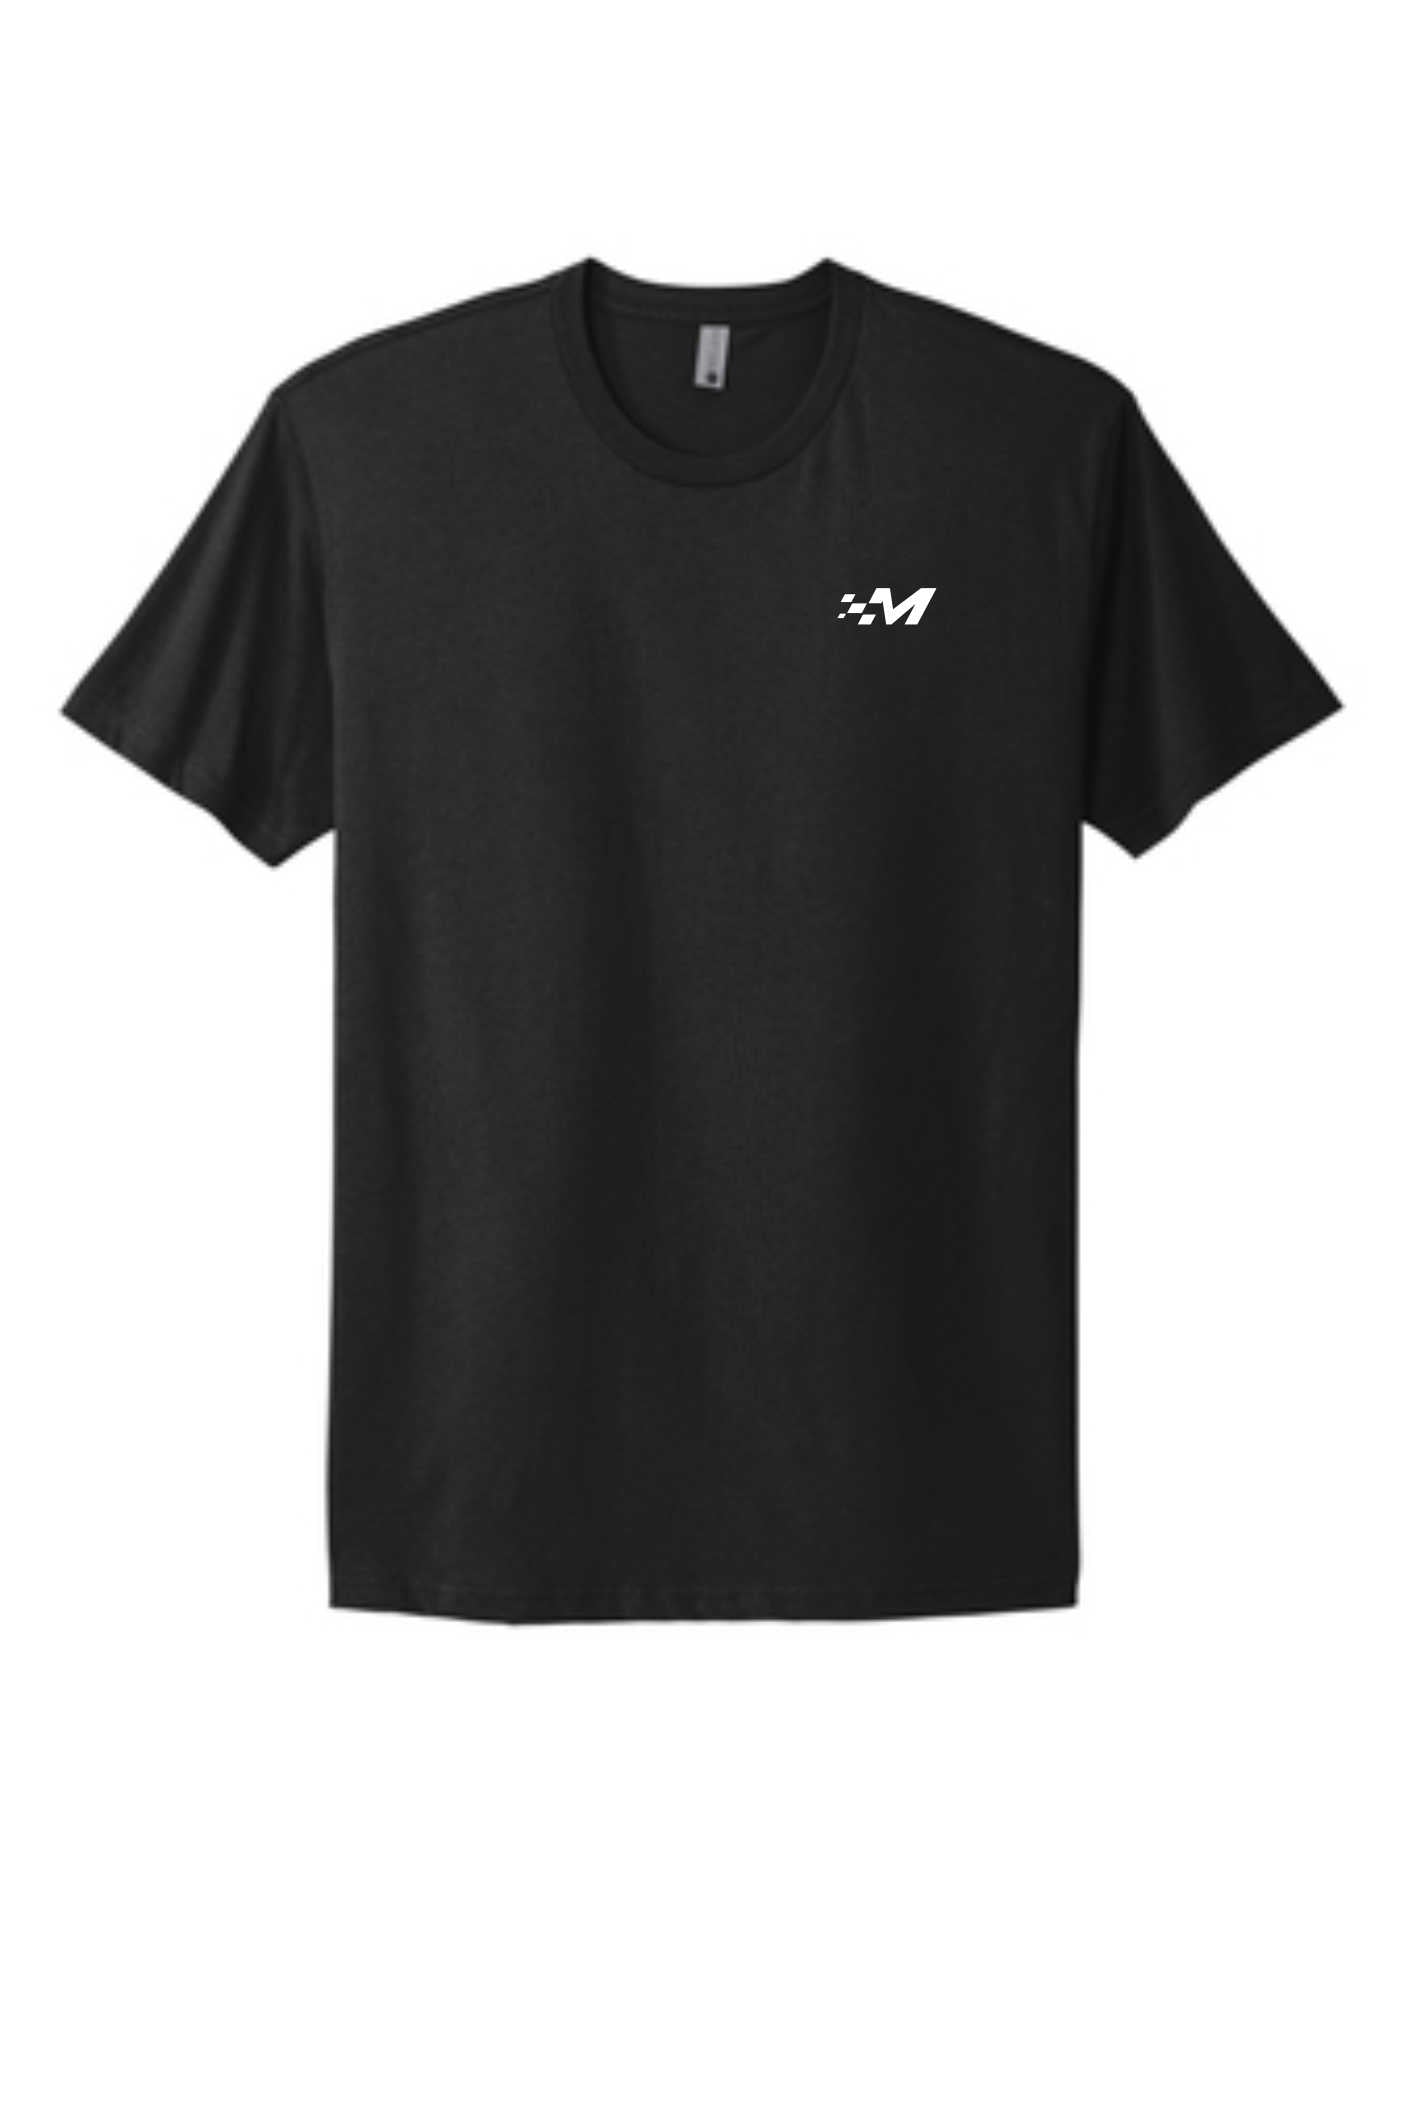 E46 M3 "Generations" - Short Sleeve T-Shirt - Black